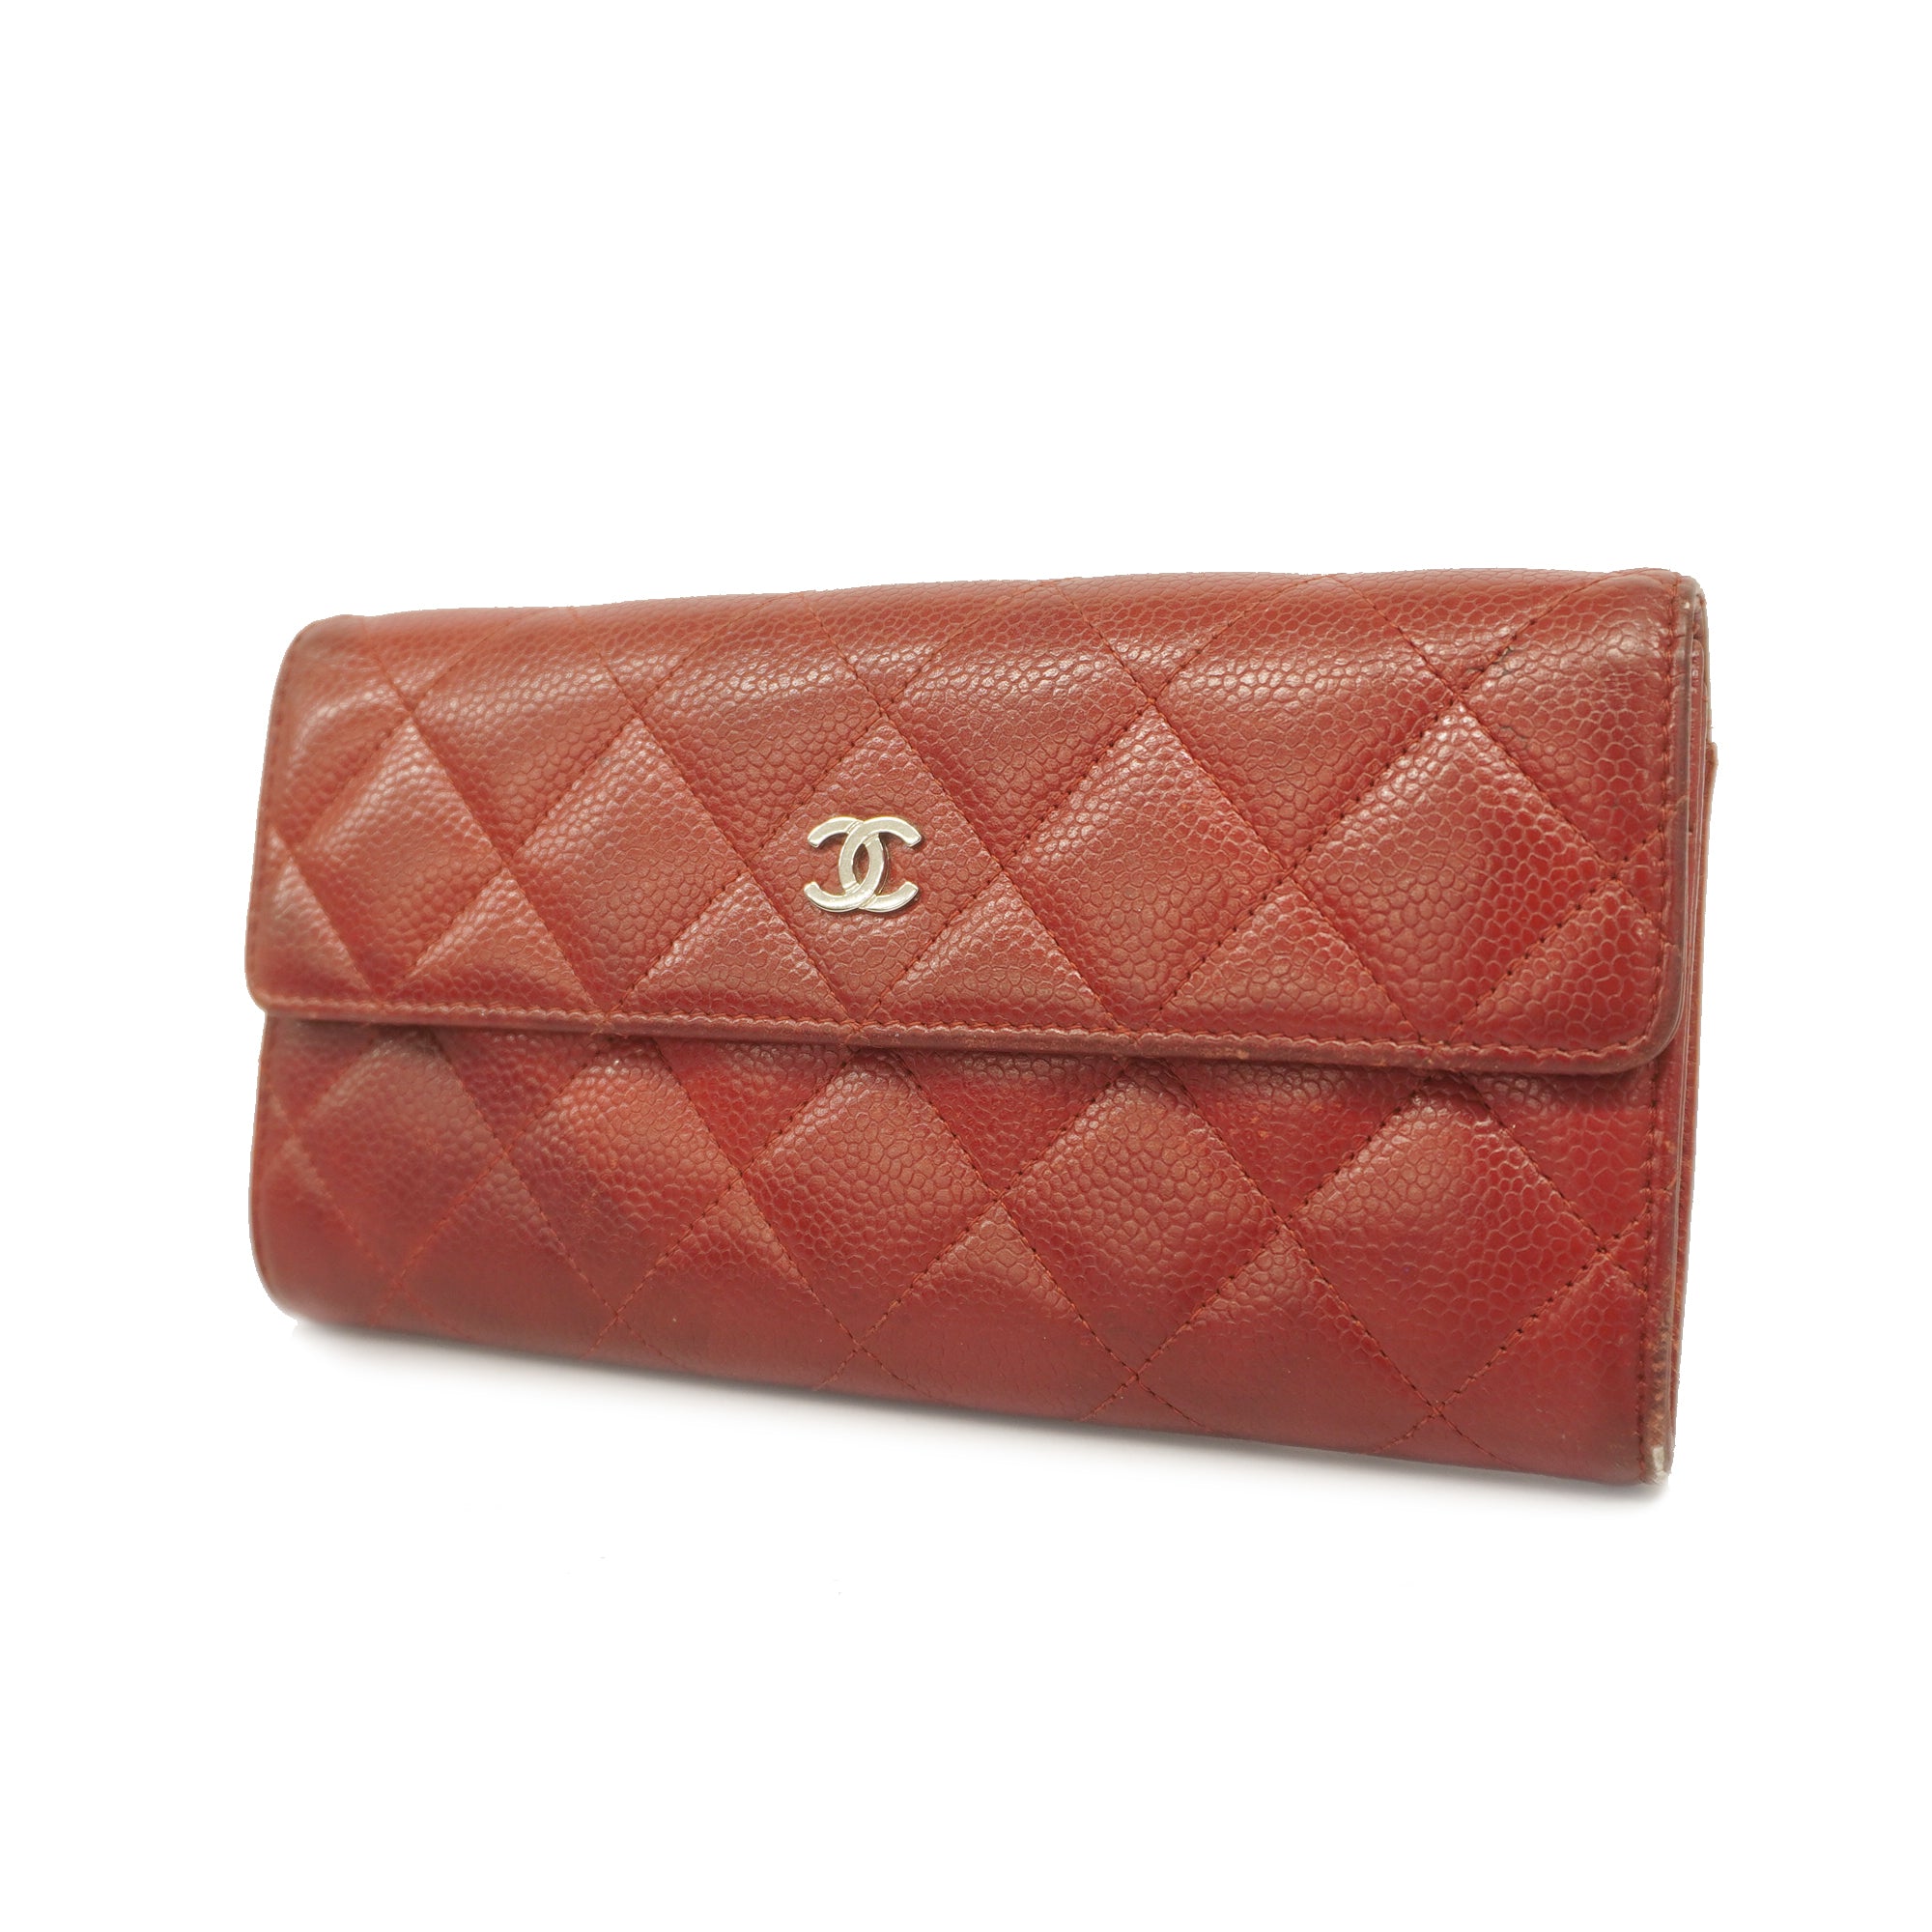 Chanel Red Leather Diamond Stitch Bifold Yen Wallet w